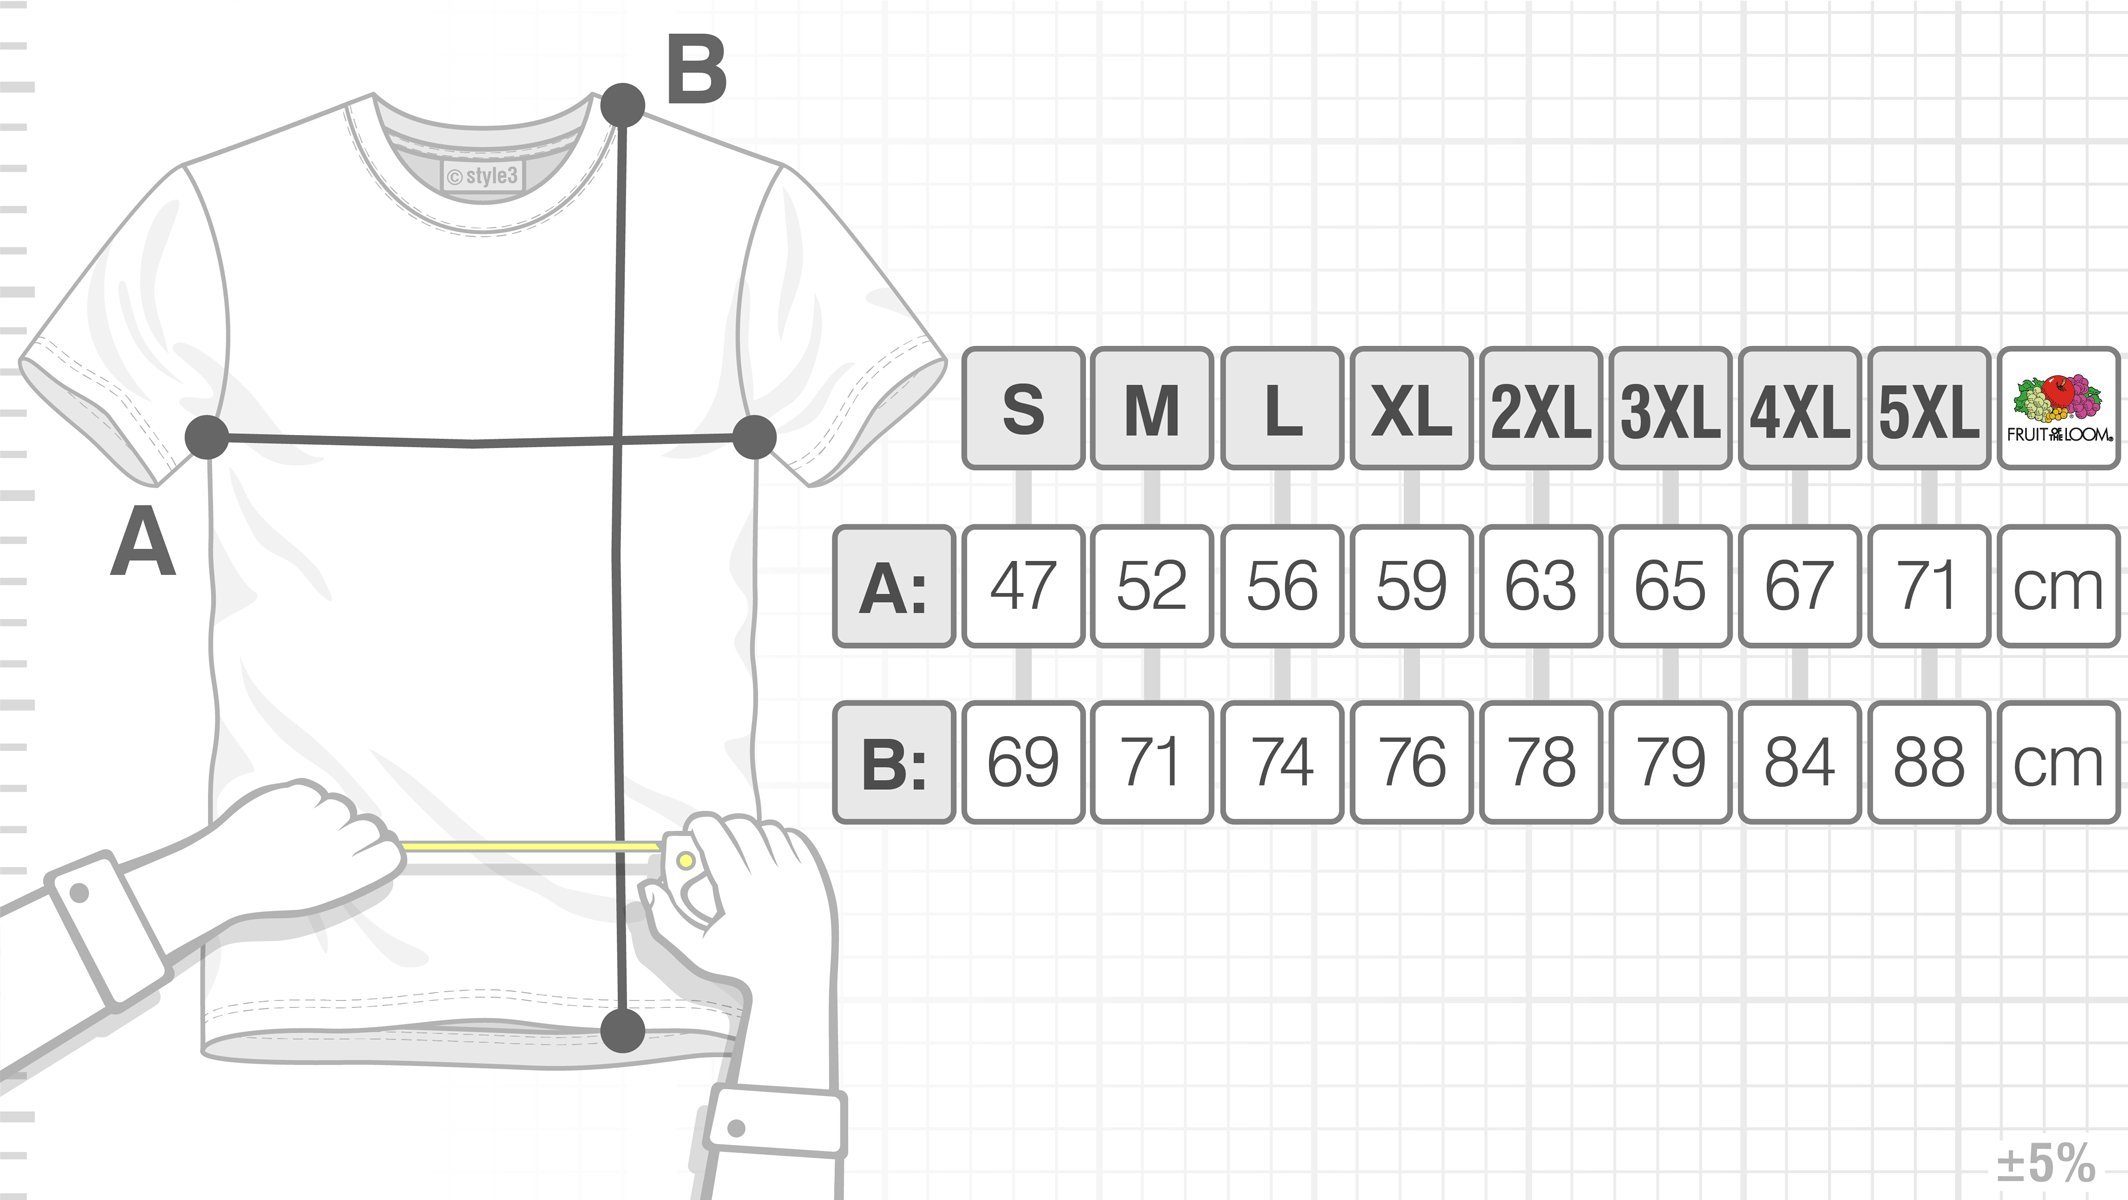 style3 Print-Shirt Herren T-Shirt Theory the Penrose Color Sheldon Bang Big lila Cooper Dreieck Escher